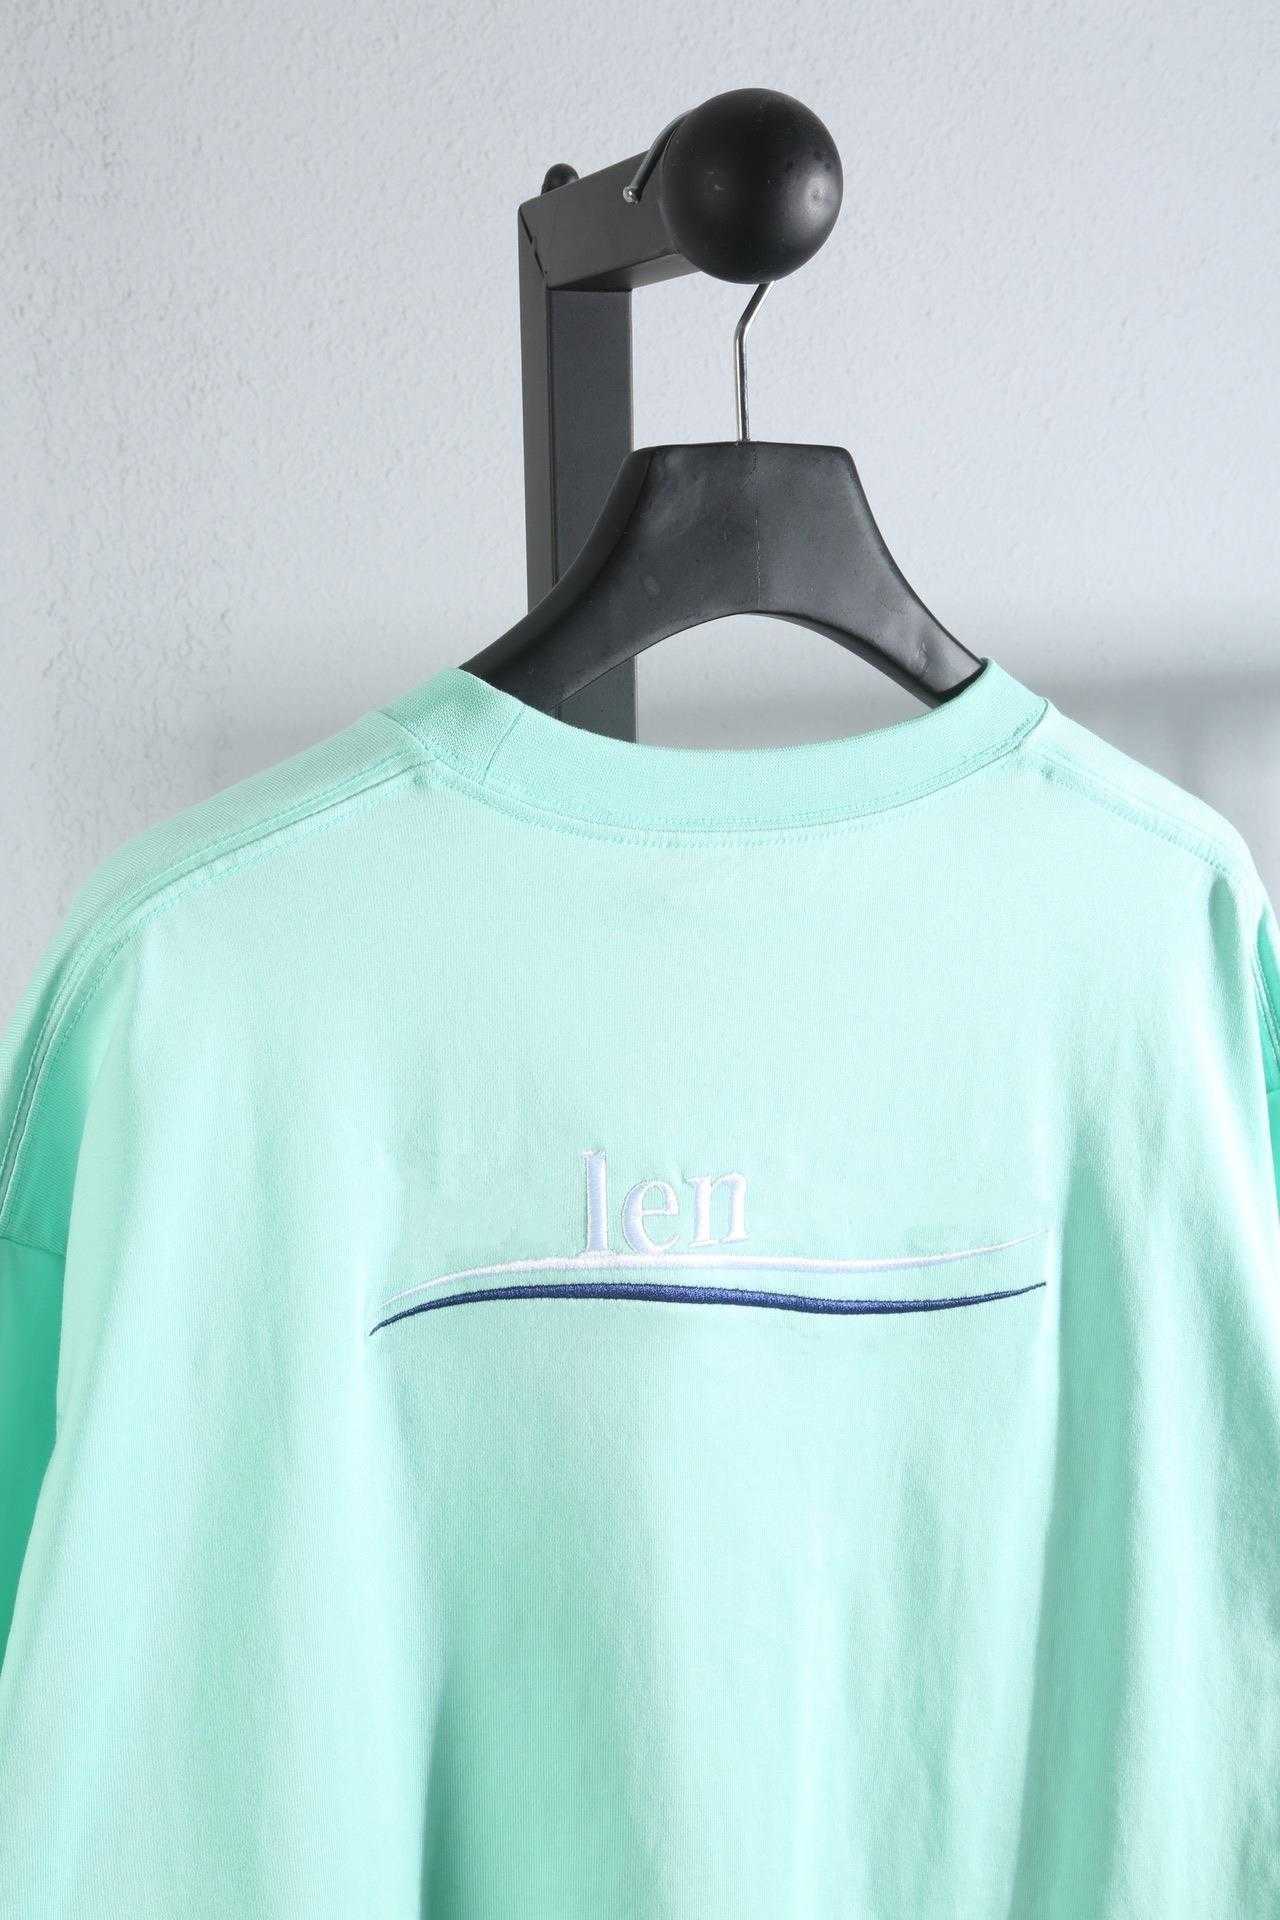 Designer Summer Women T Shirt Shirt High Edition Coke Embroidery Sleeve Loose Fit Unisex T-shirt Casual mångsidig vår/sommar